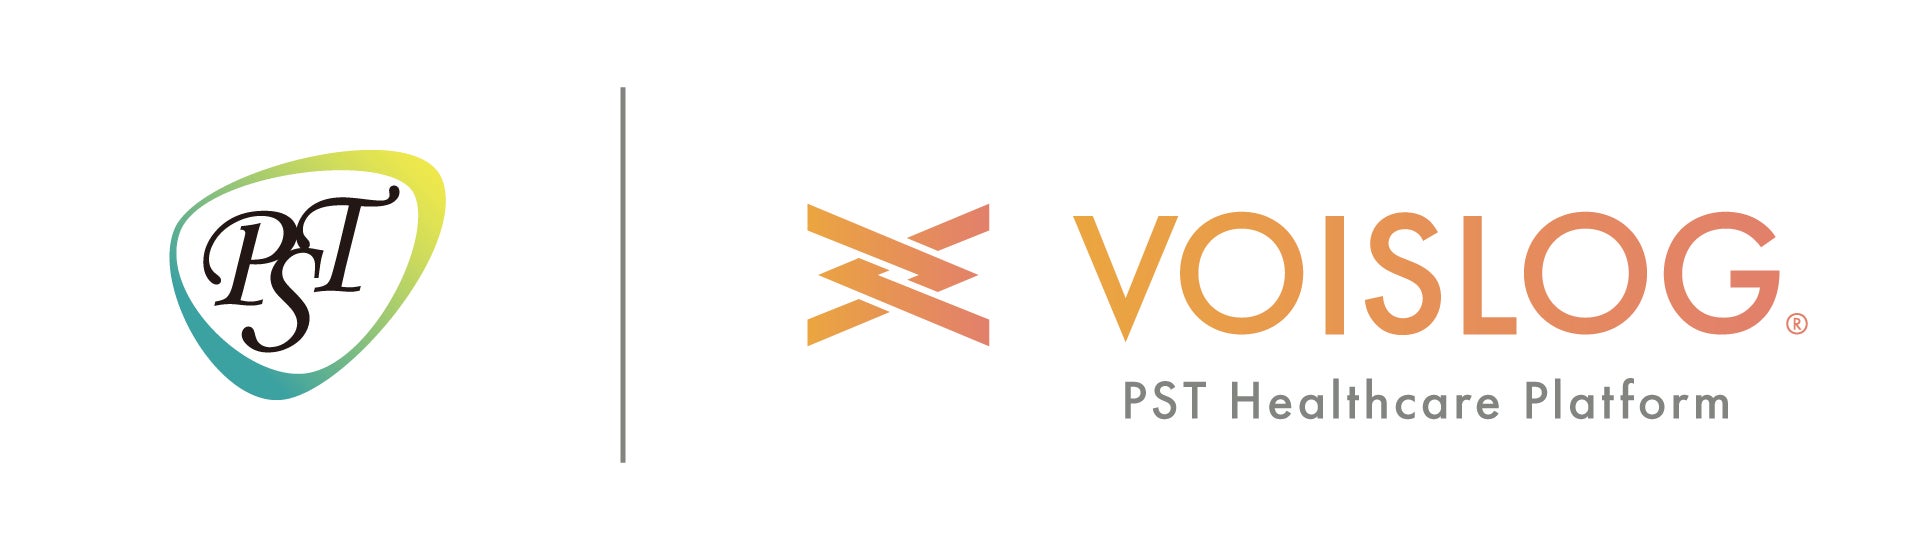 PST株式会社、音声バイオマーカー技術を活用した新プラットフォーム「VOISLOG®」を企業向けにリリース